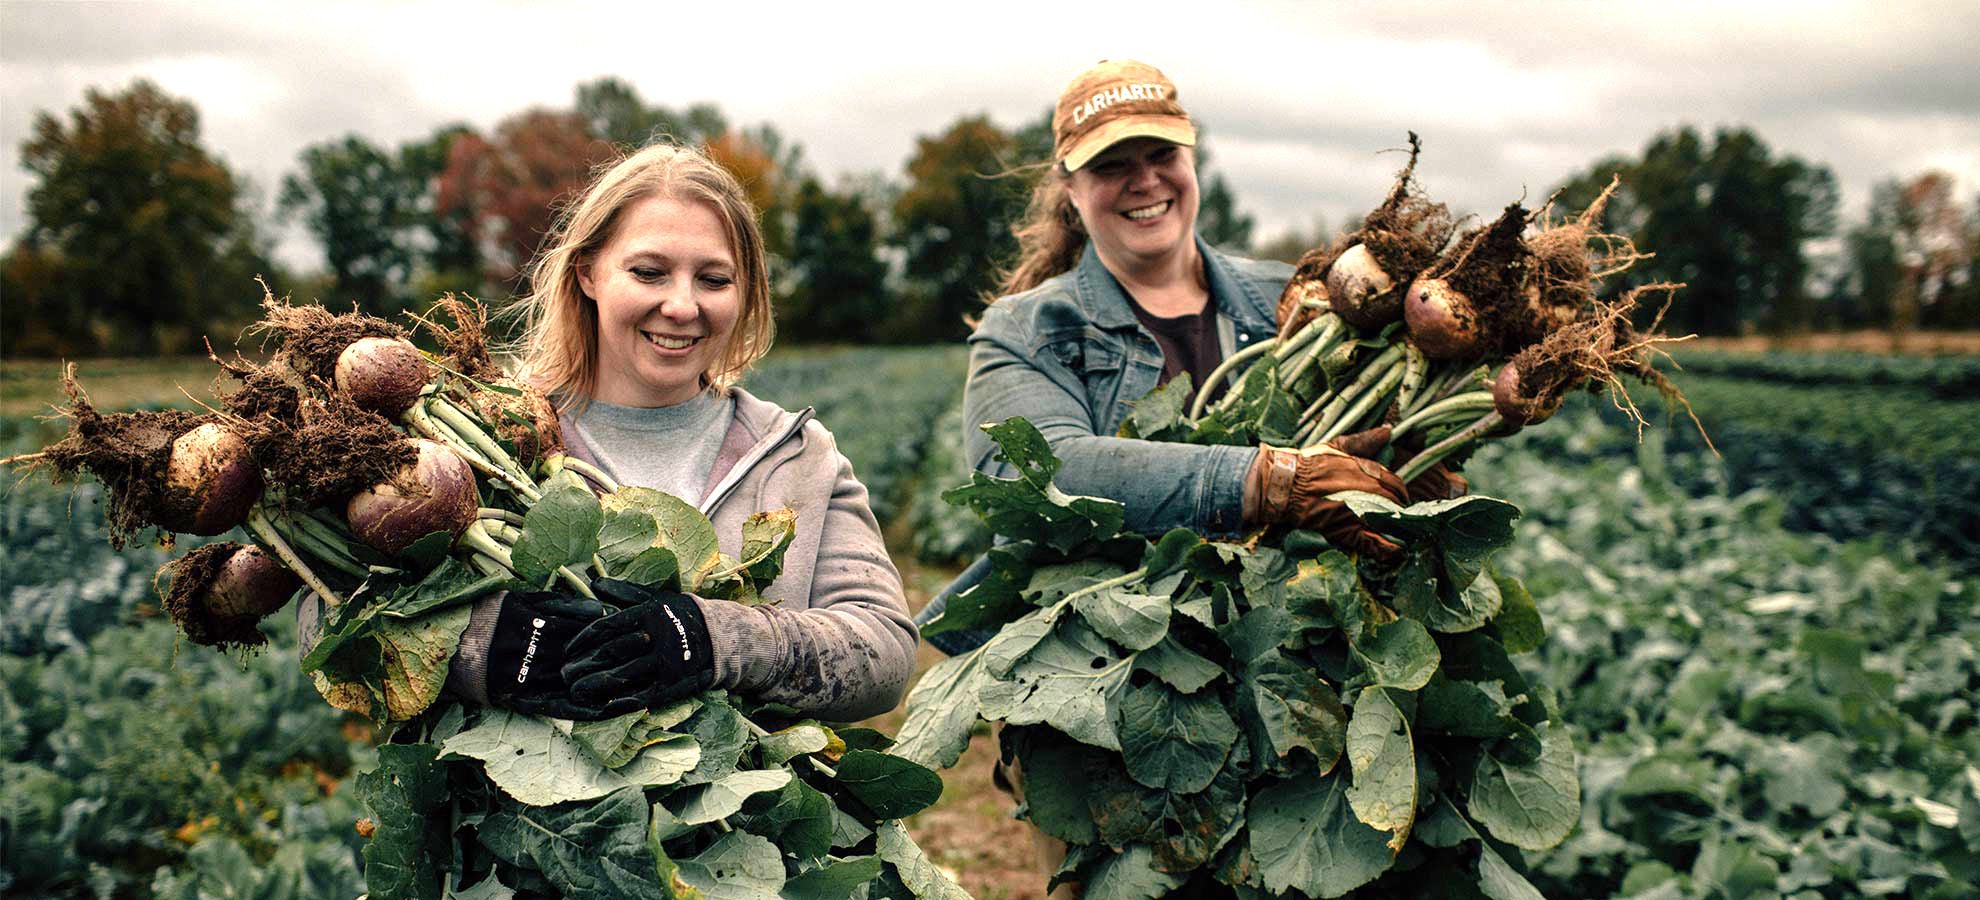 Two female farmers holding bundles of fresh produce in field.